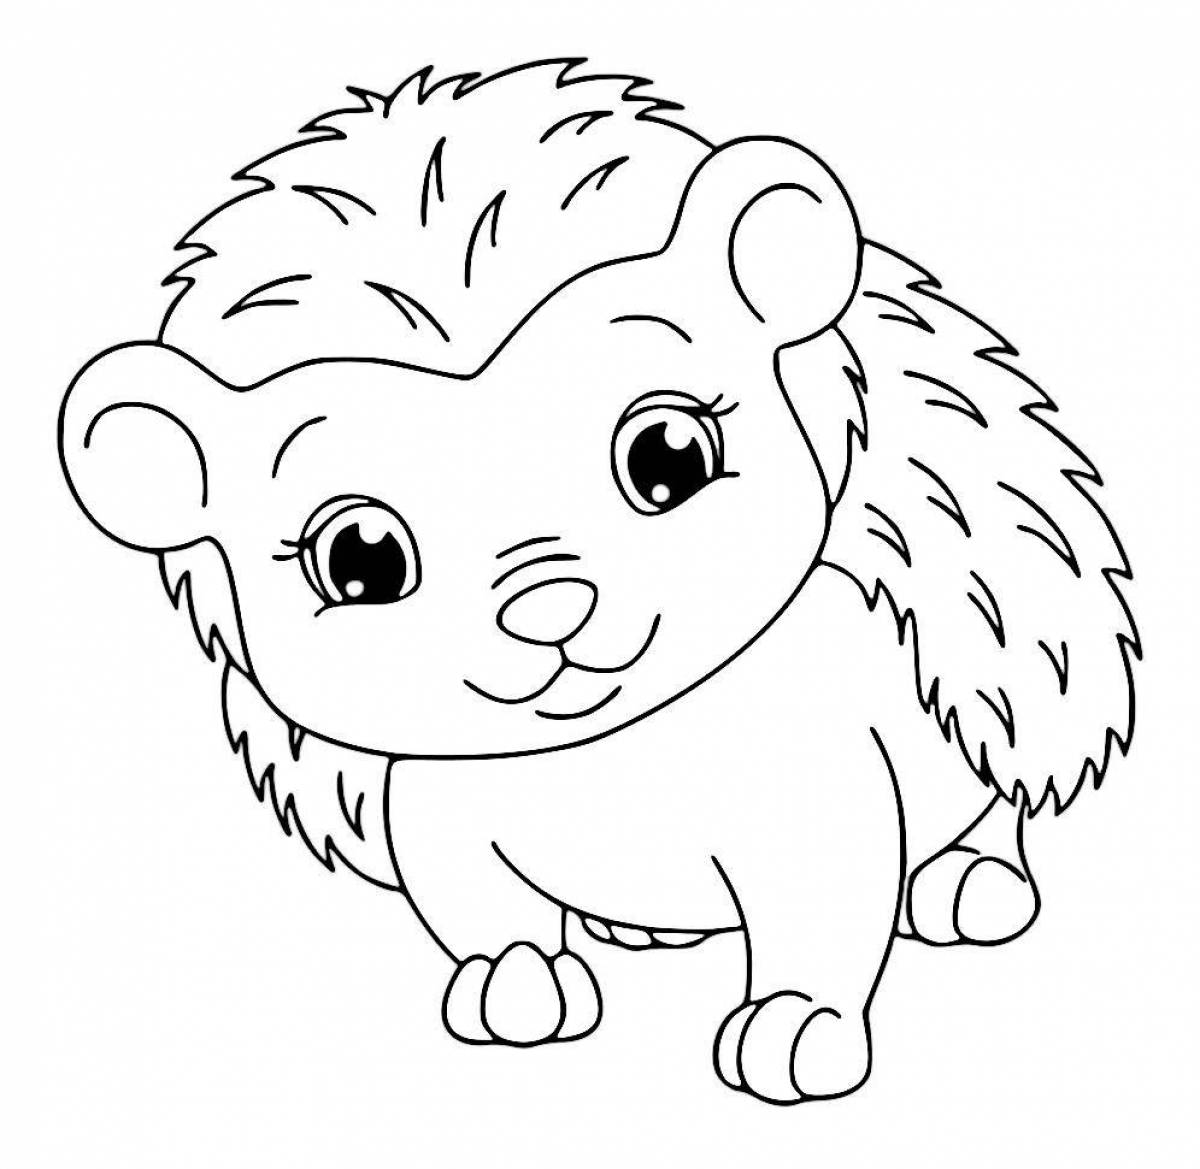 Drawing of a radiant hedgehog